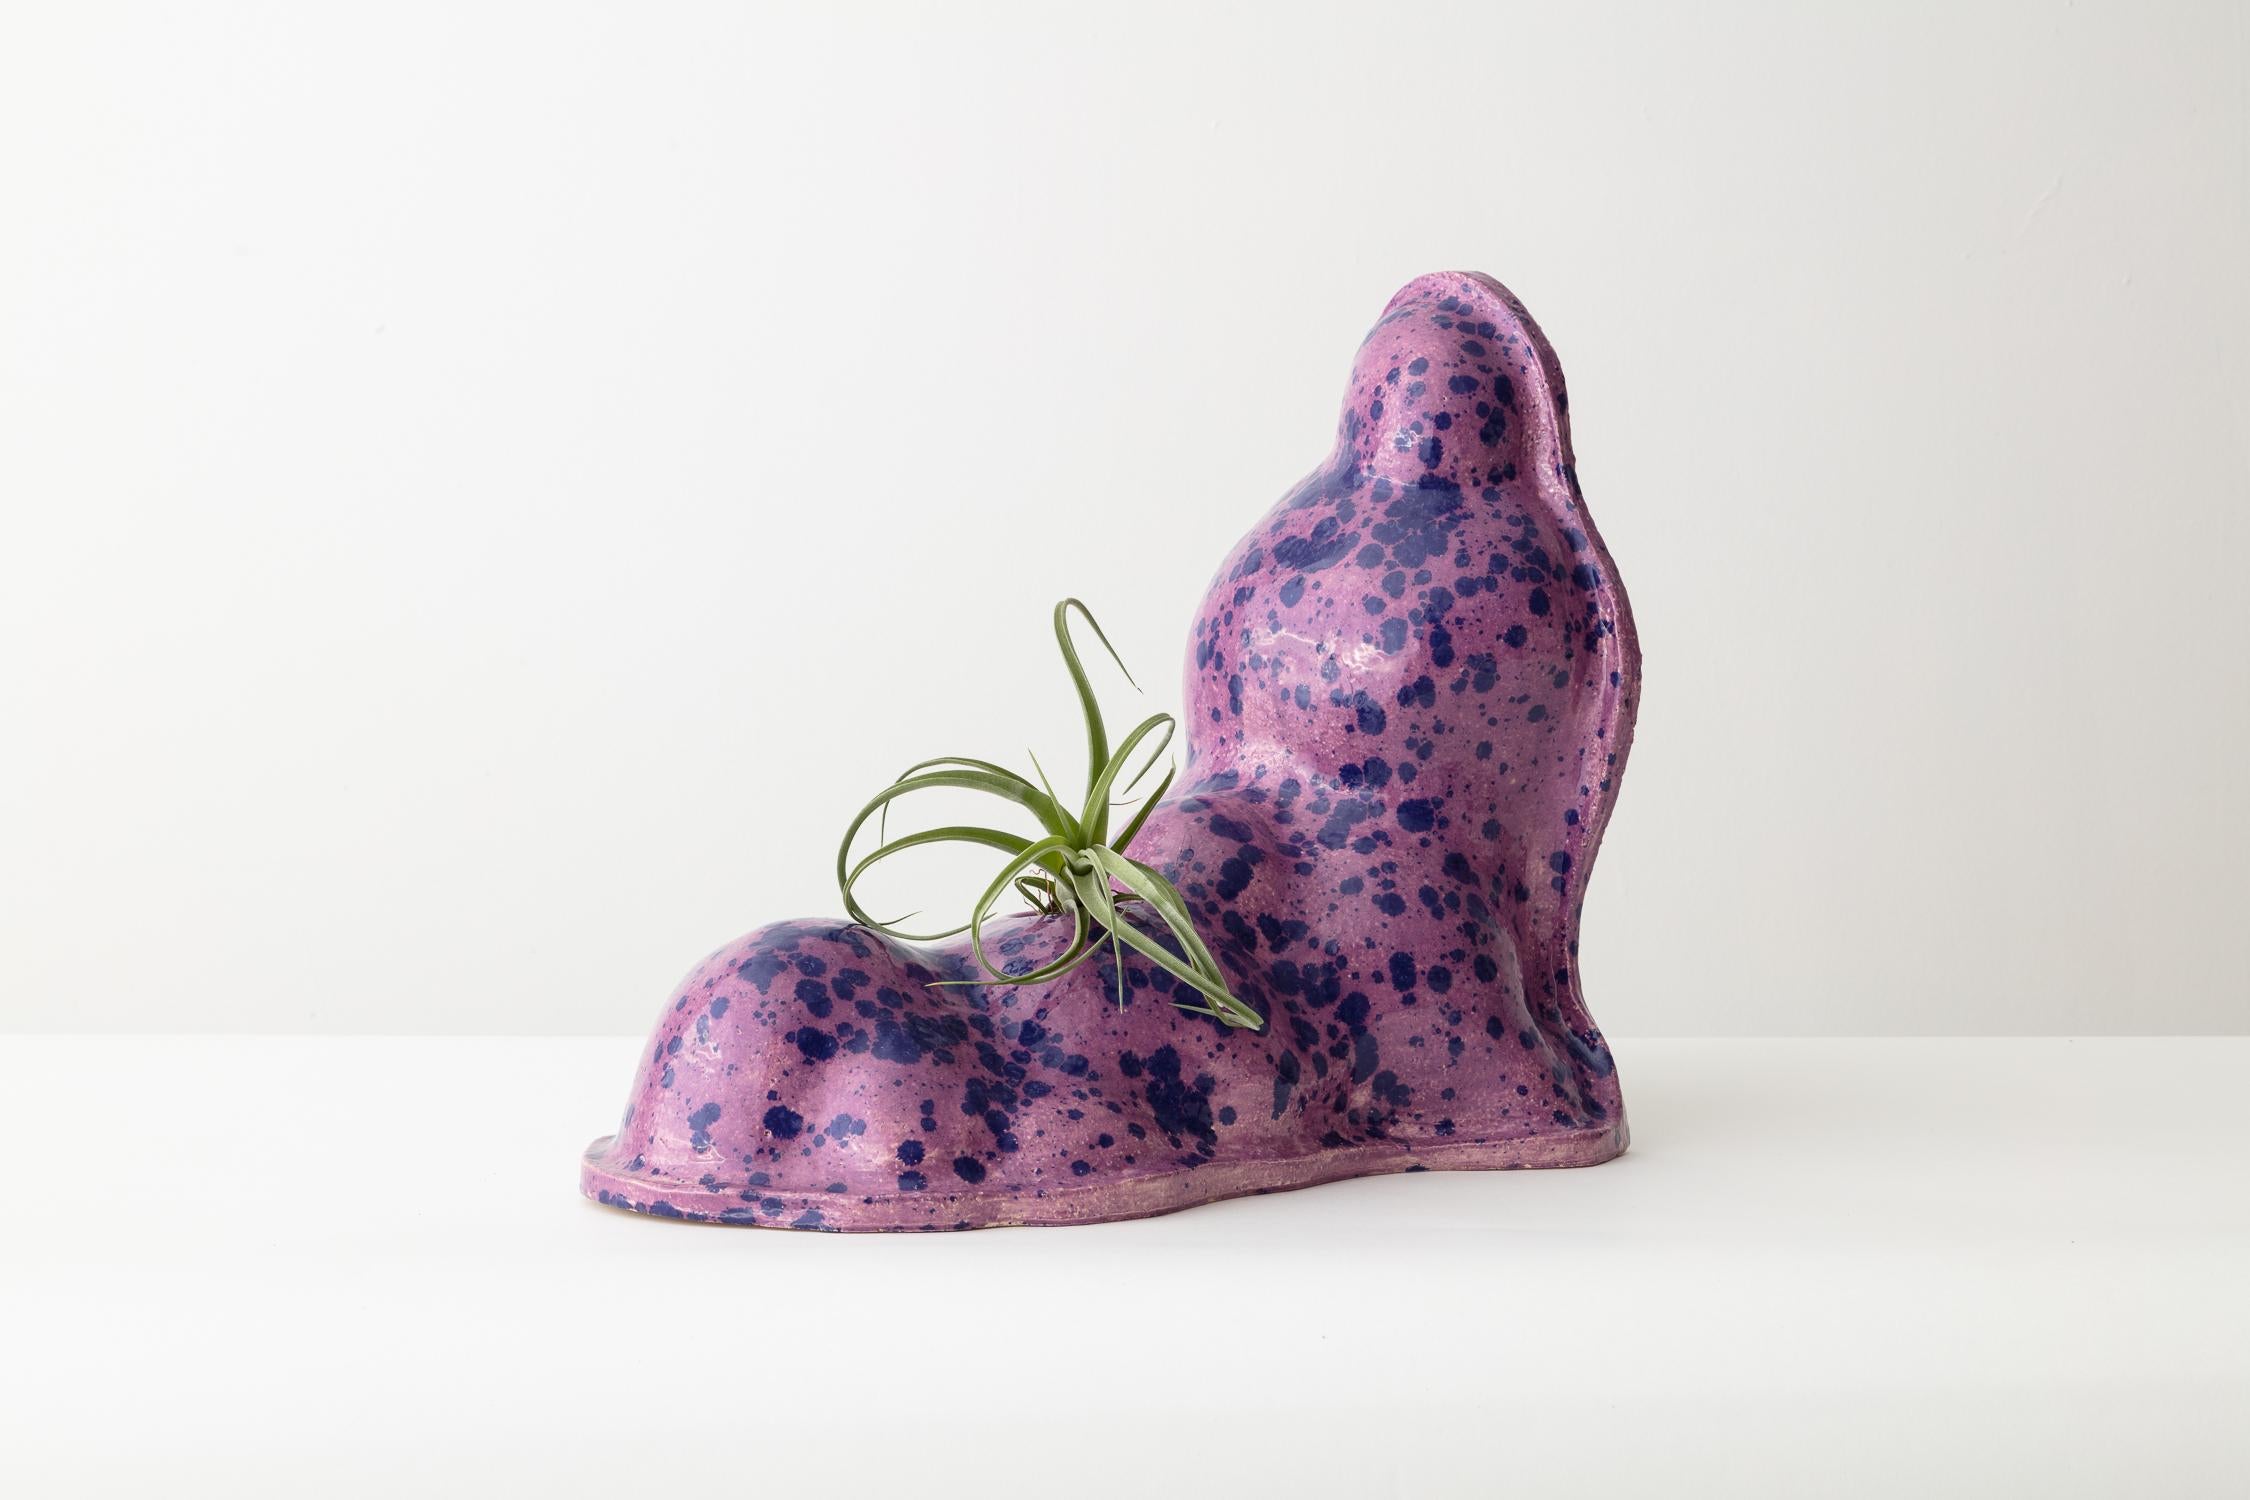 Handmade by BNAG (Oliver-Selim Boualam and Lukas Marstaller)

Materials: Glazed ceramic

Dimensions: H 16